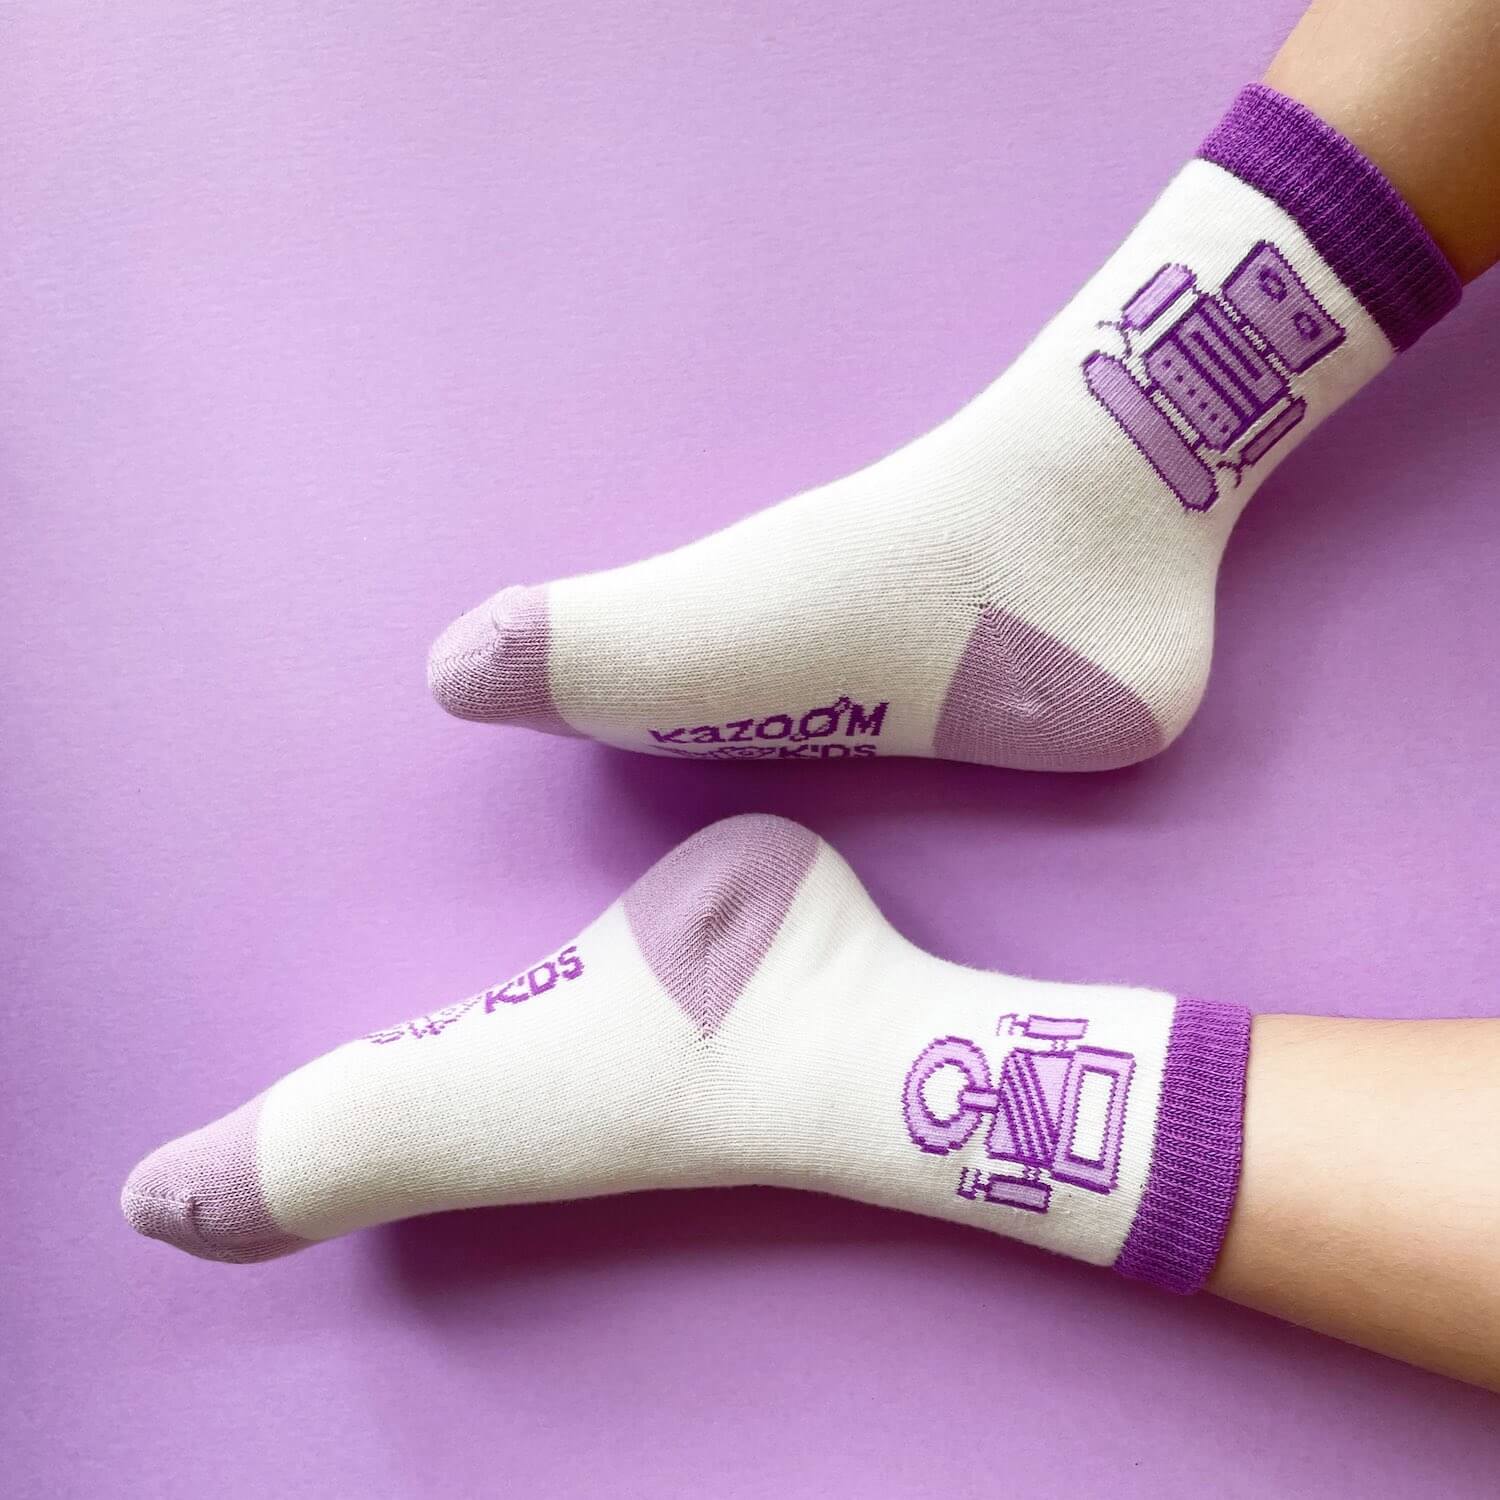 Toddler Girl Socks - White with purple robots